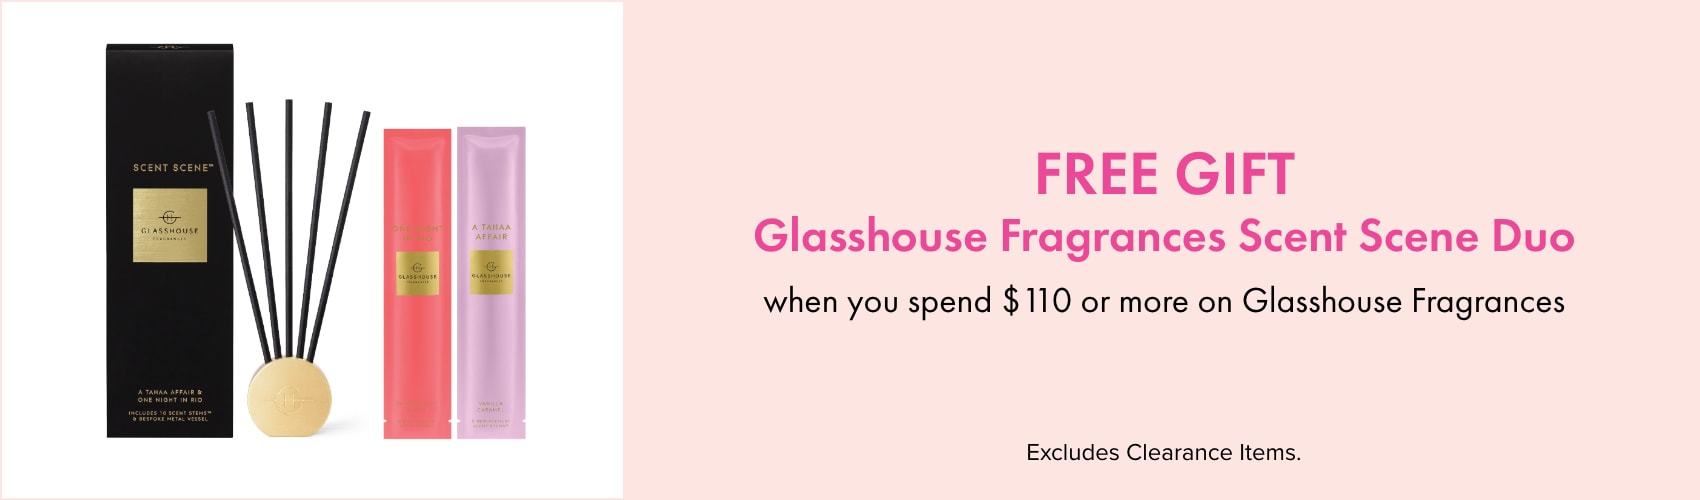 FREE GIFT Glasshouse Fragrances Scent scene duo